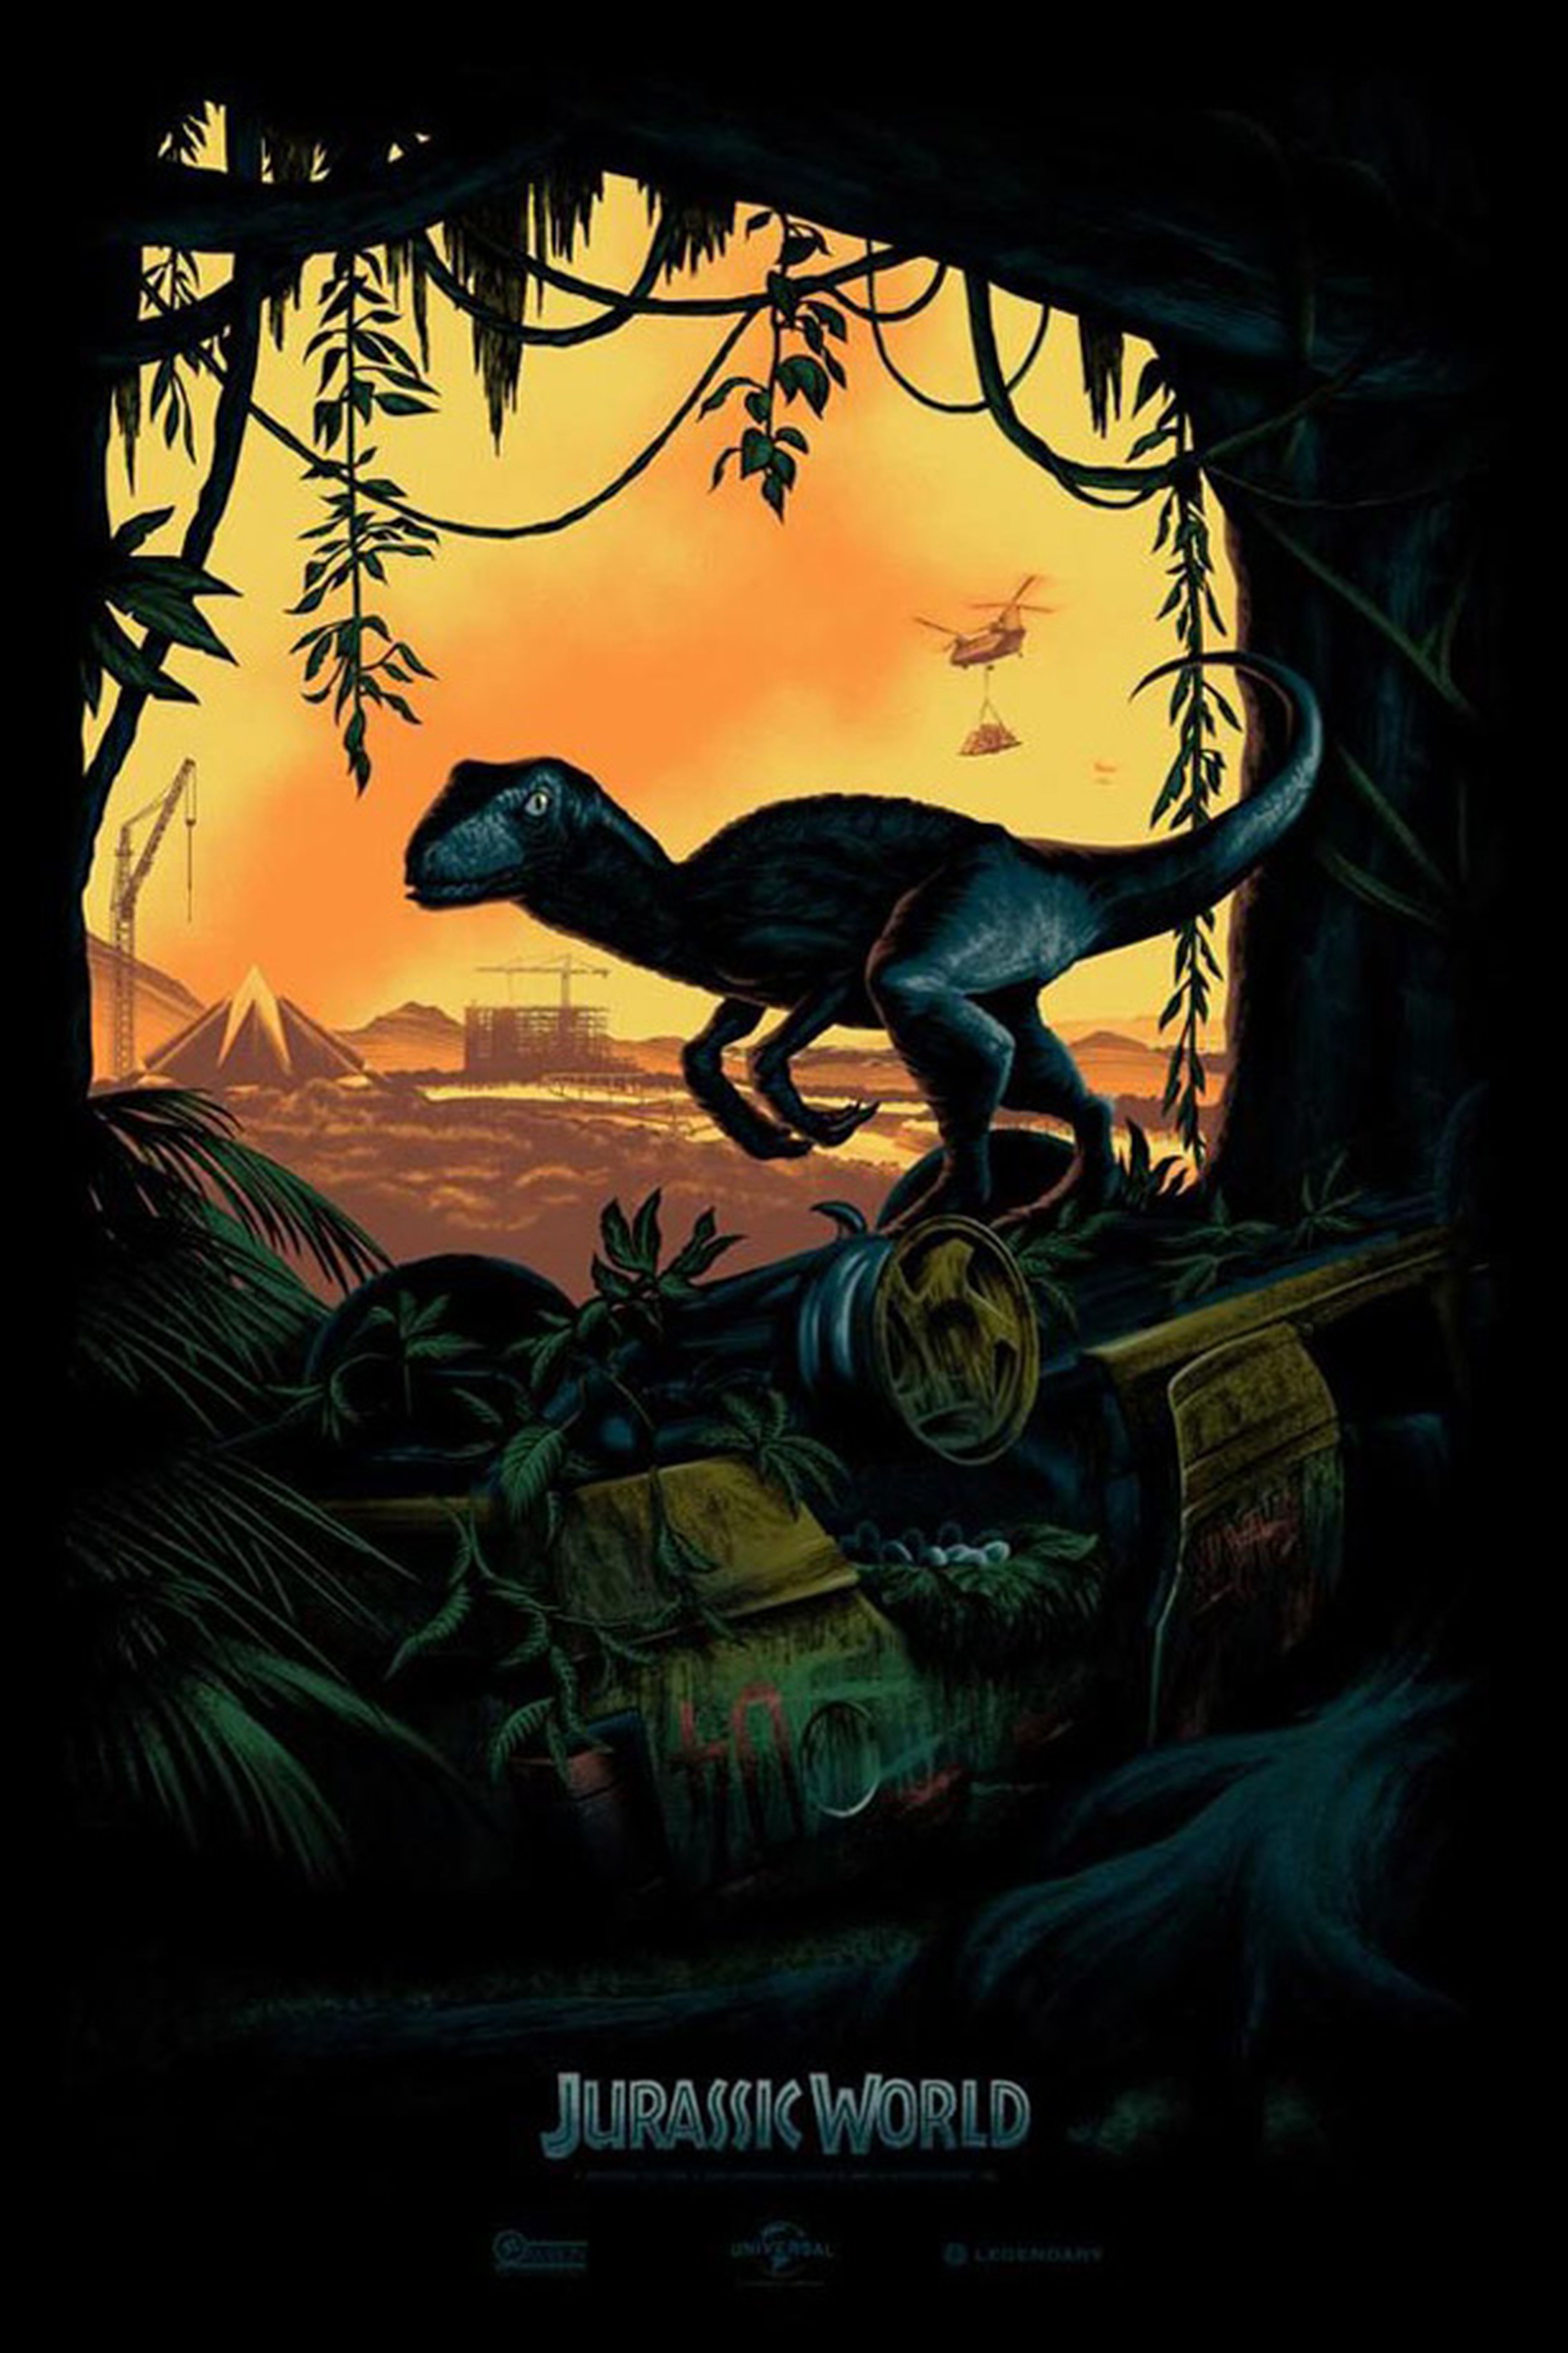 Nuevo póster oficial de Jurassic World